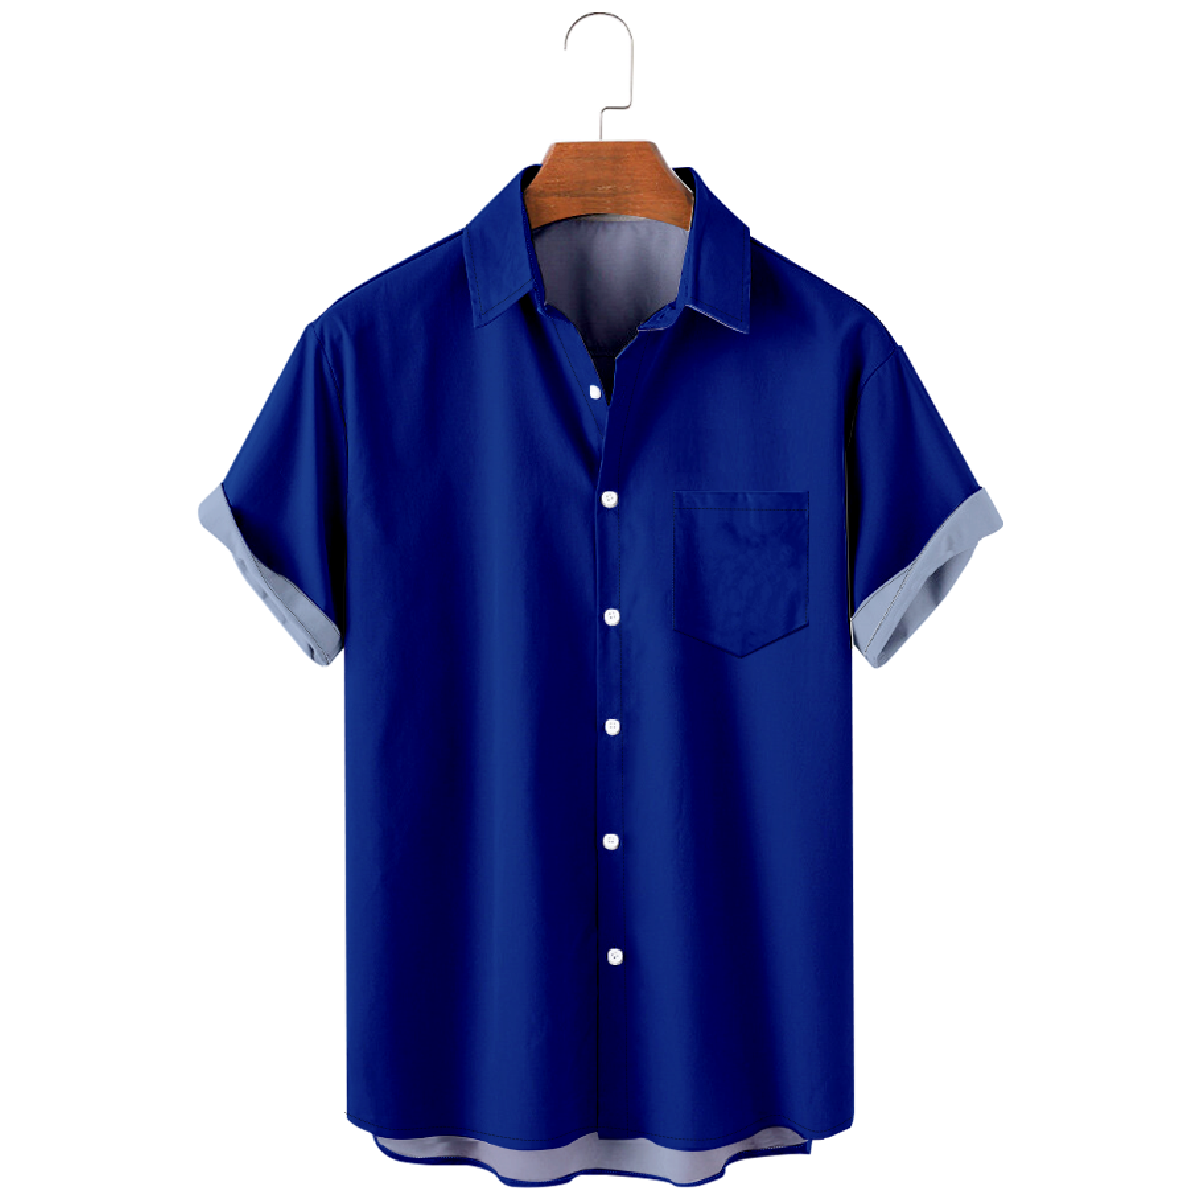 Buffalo Blue Button Up Shirt for Men Shirt with Front Pocket Short Sleeve